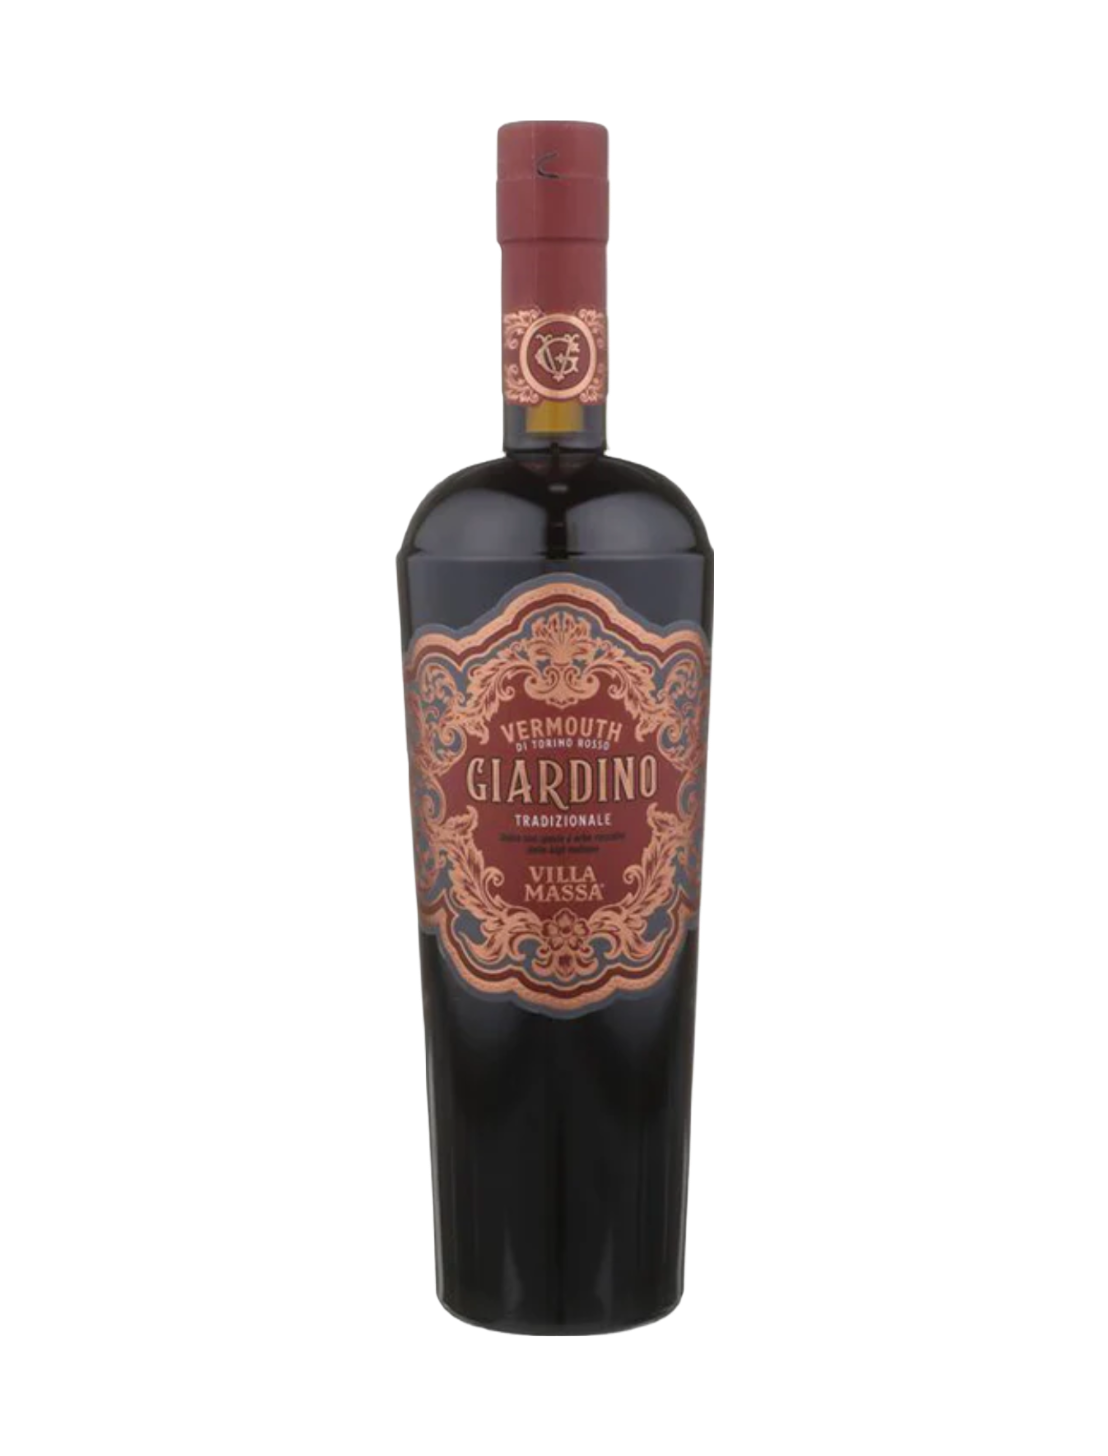 A bottle of Villa Massa Giardino Vermouth - Rich, silky, with dark fruit and spice notes.